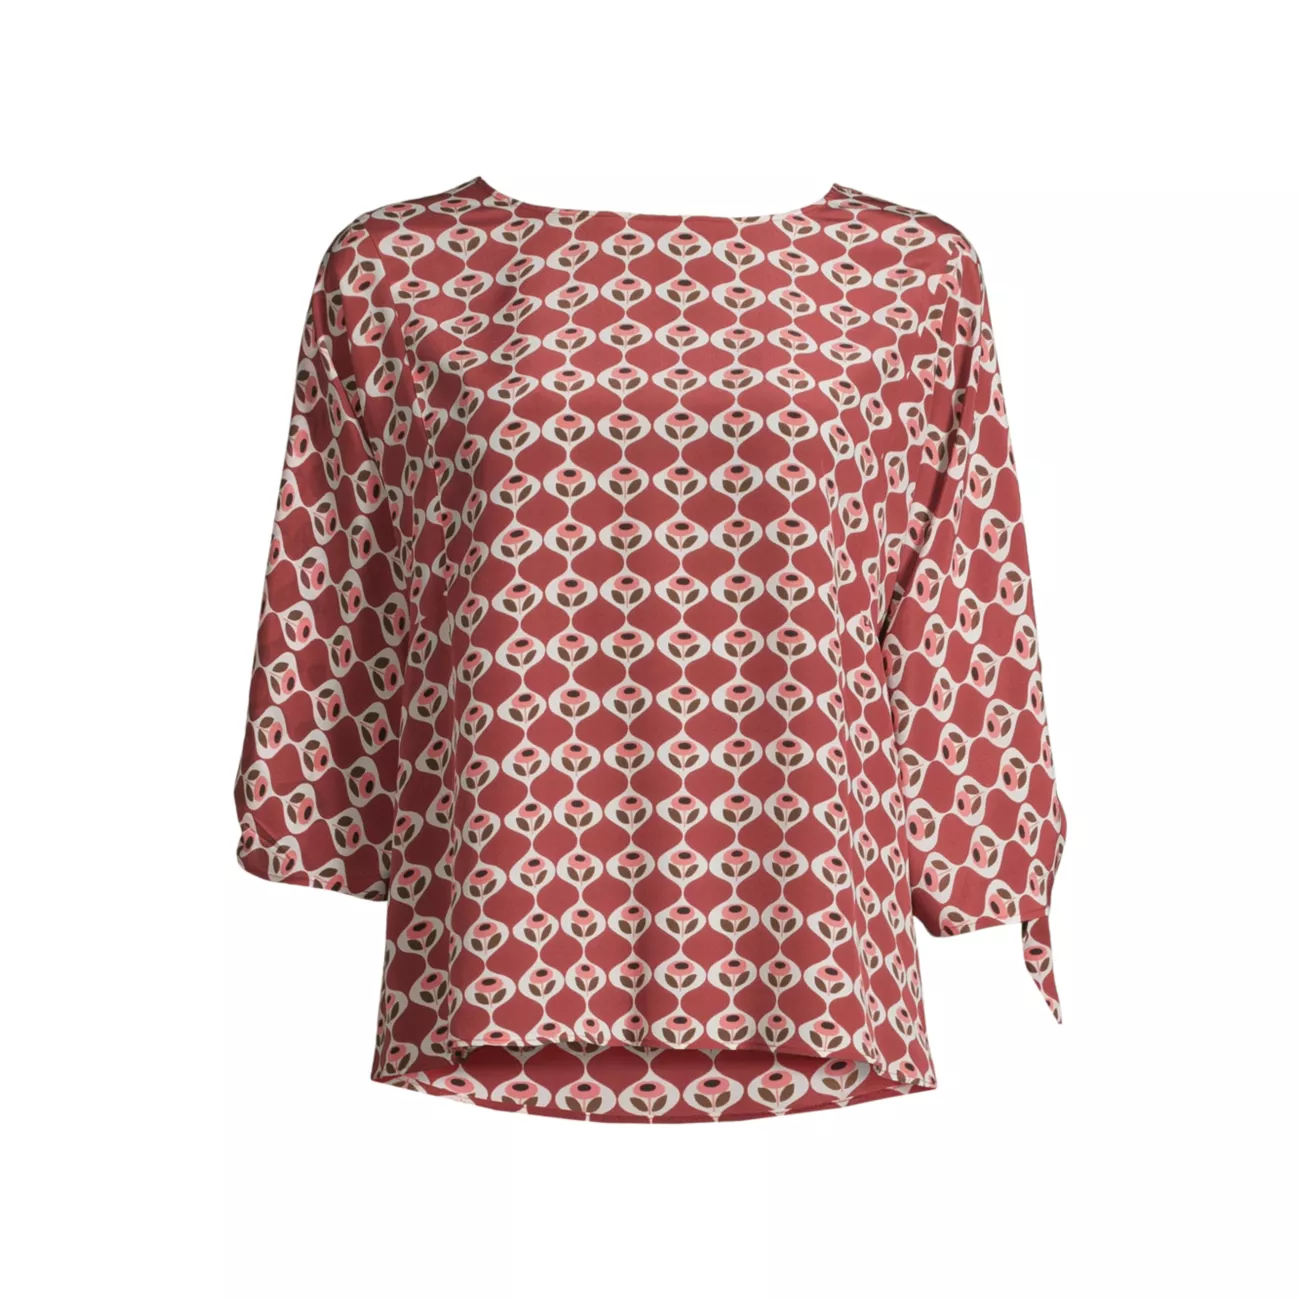 Шелковая блузка Adone с геометрическим рисунком Weekend Max Mara